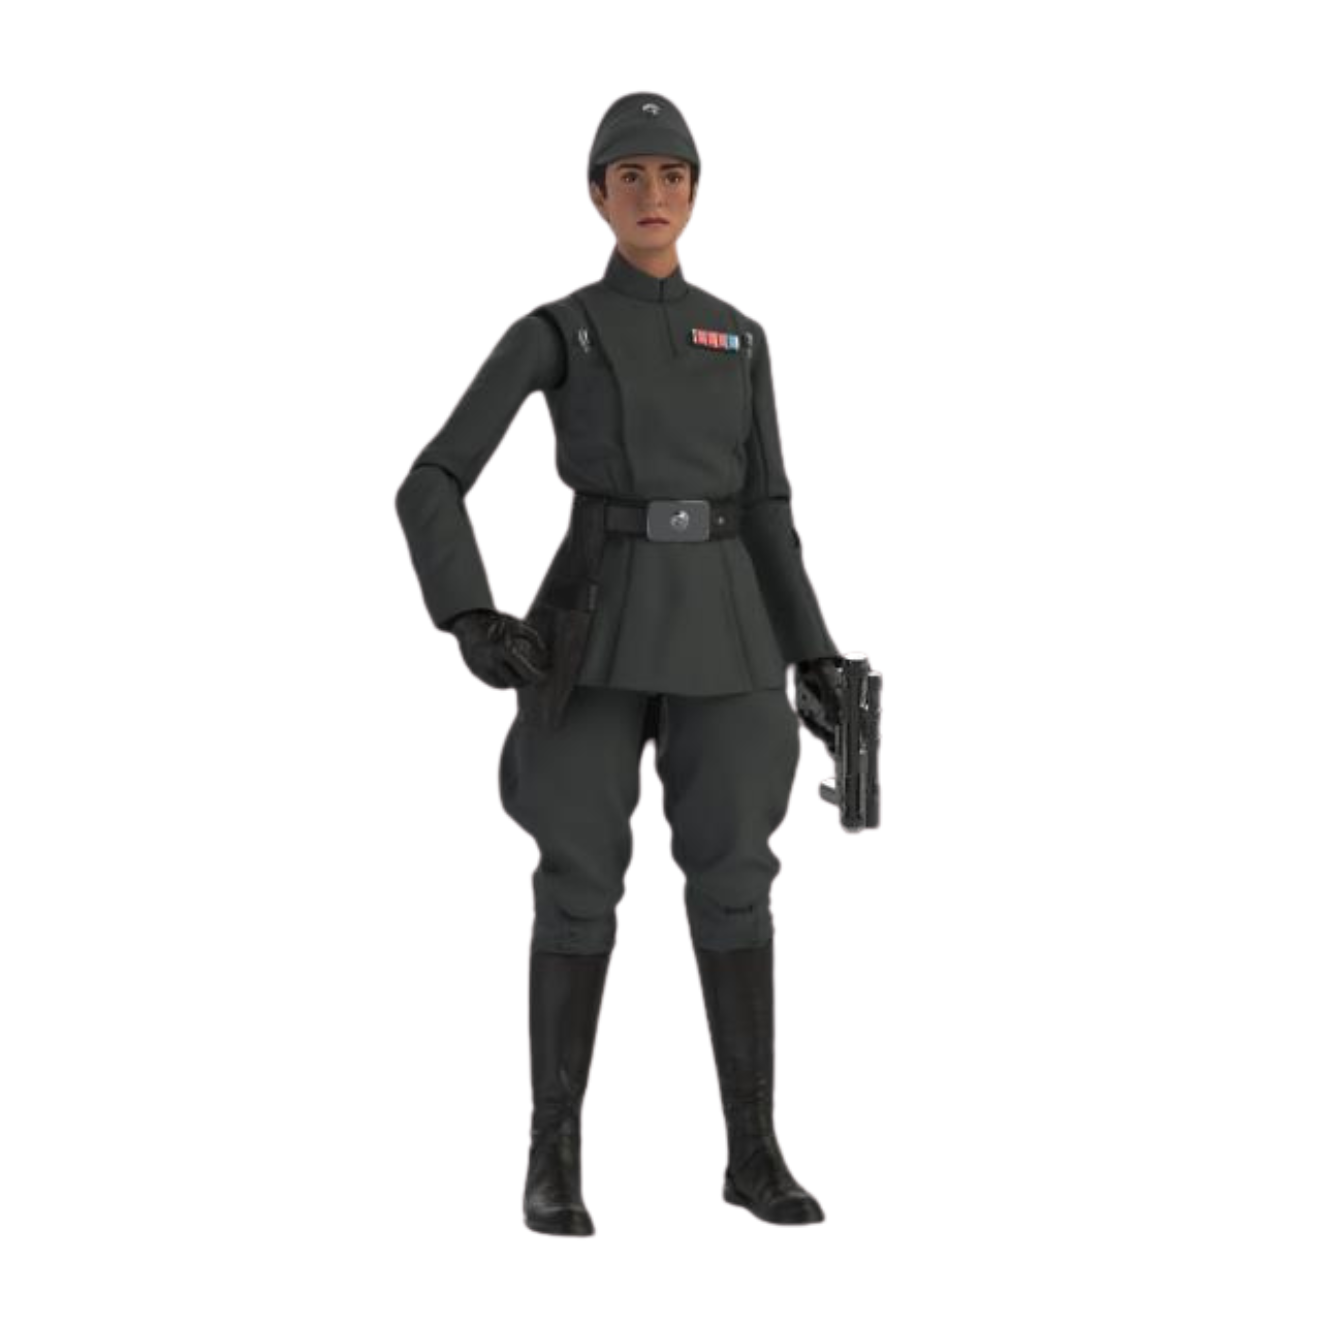 Star Wars: The Black Series 6" Imperial Officer Tala (Obi-Wan Kenobi)